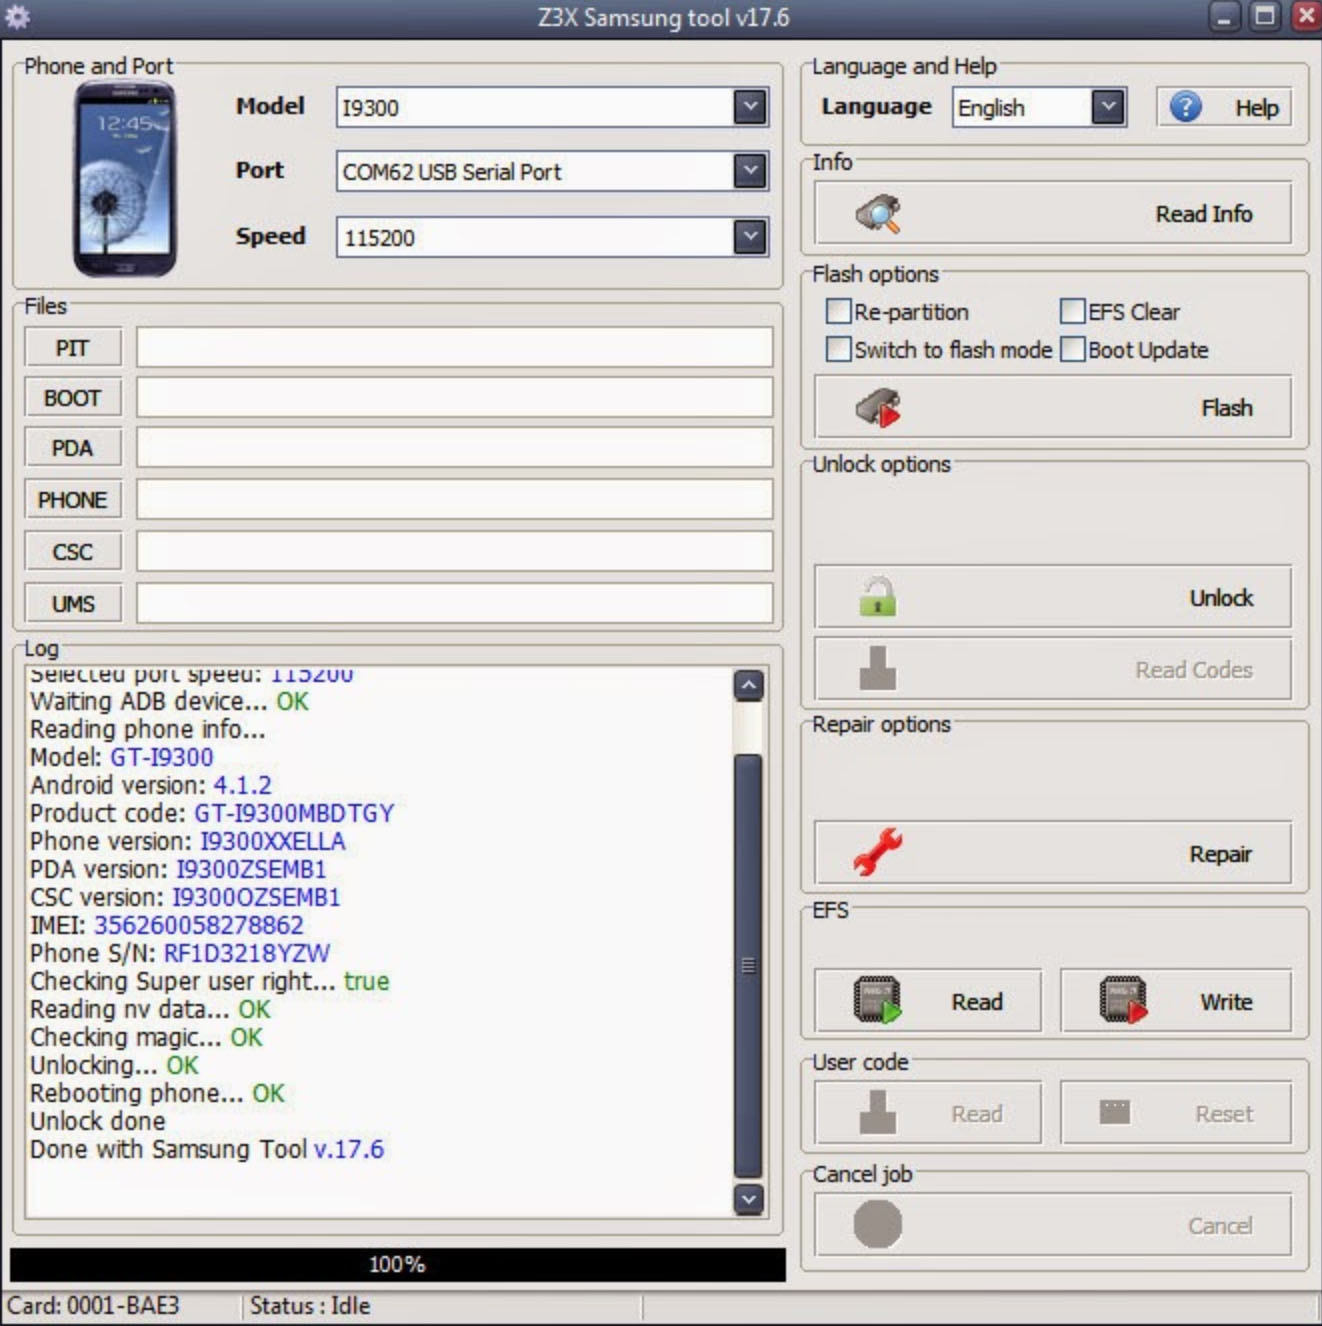 Free Samsung S4 Unlock Code Generator By Imei Number